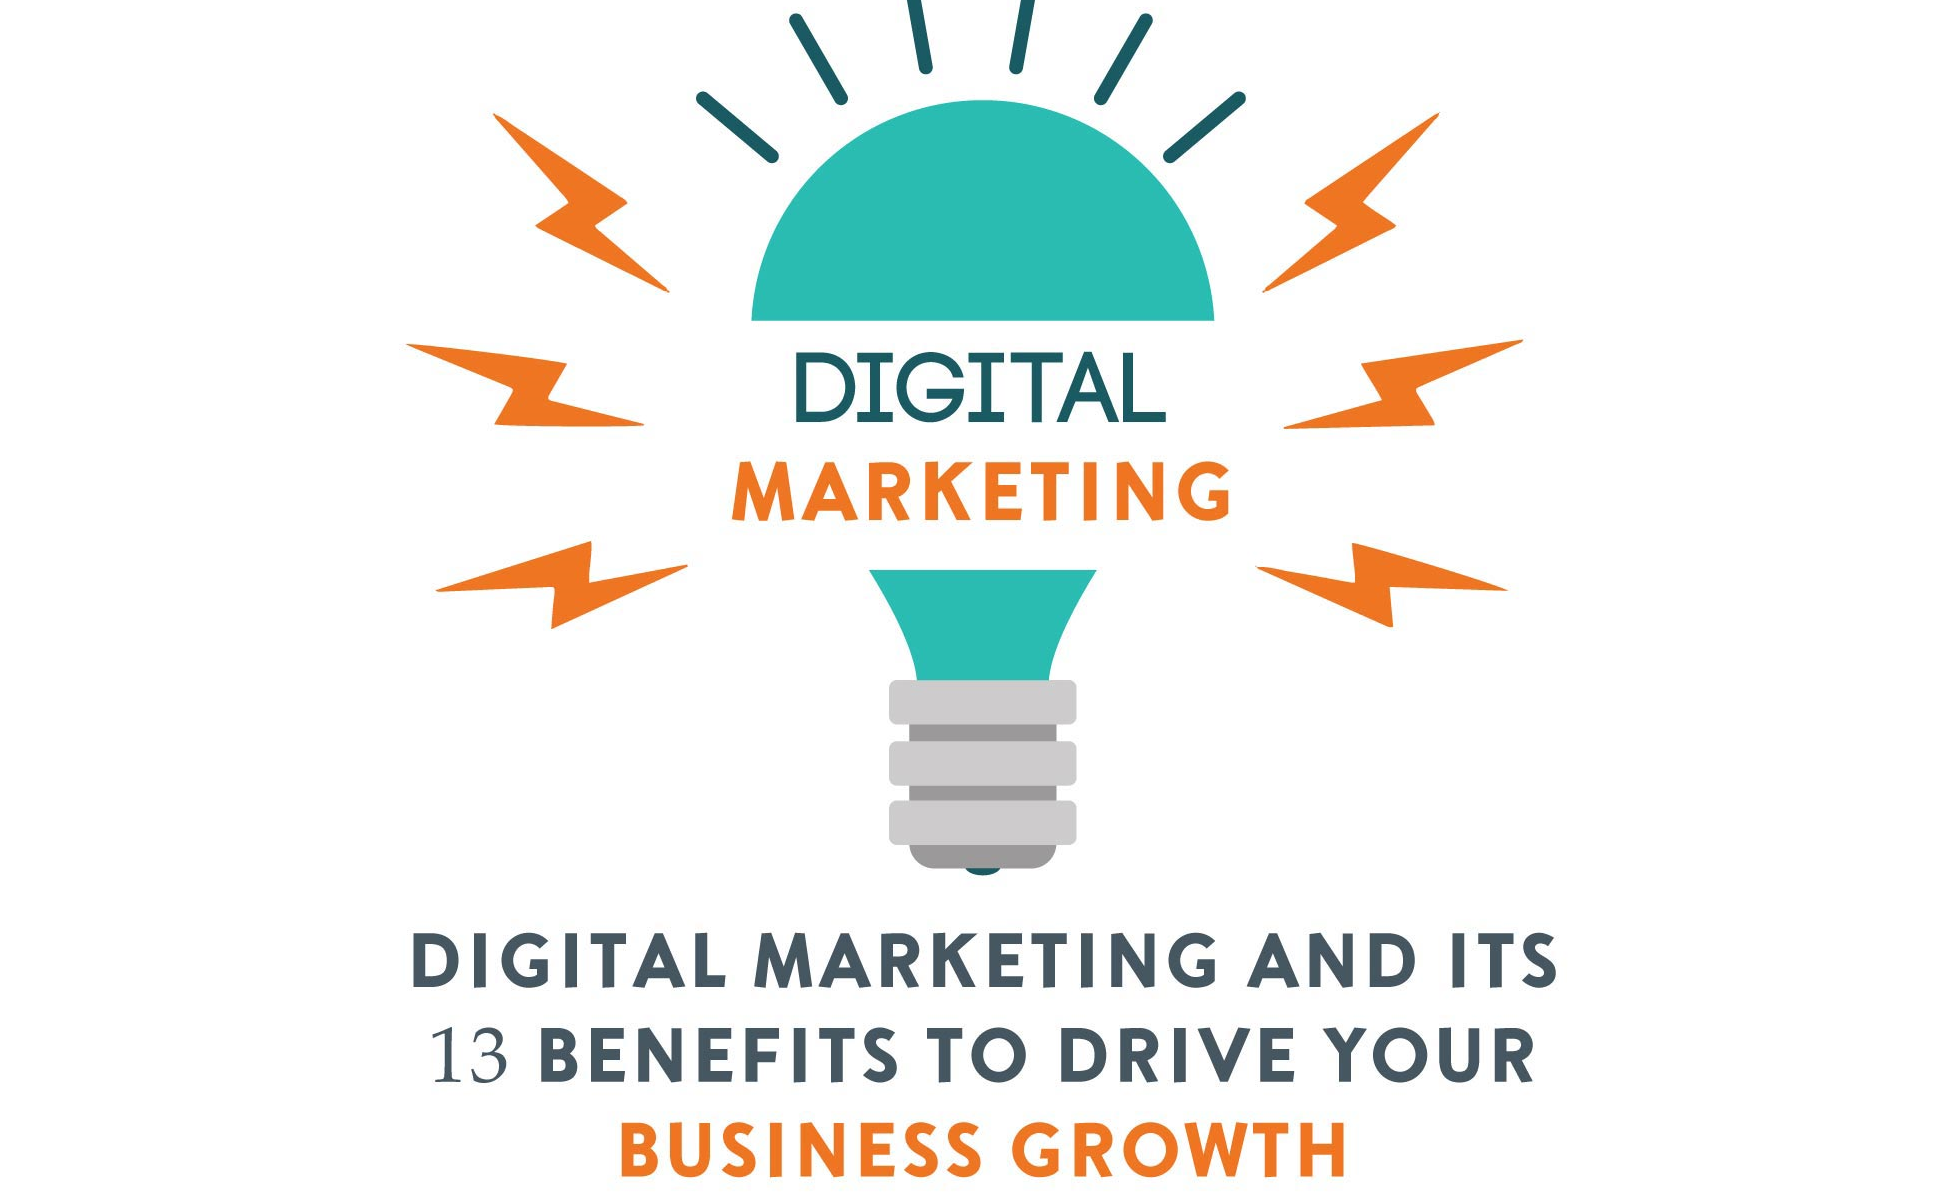 Digital marketing and its benefits